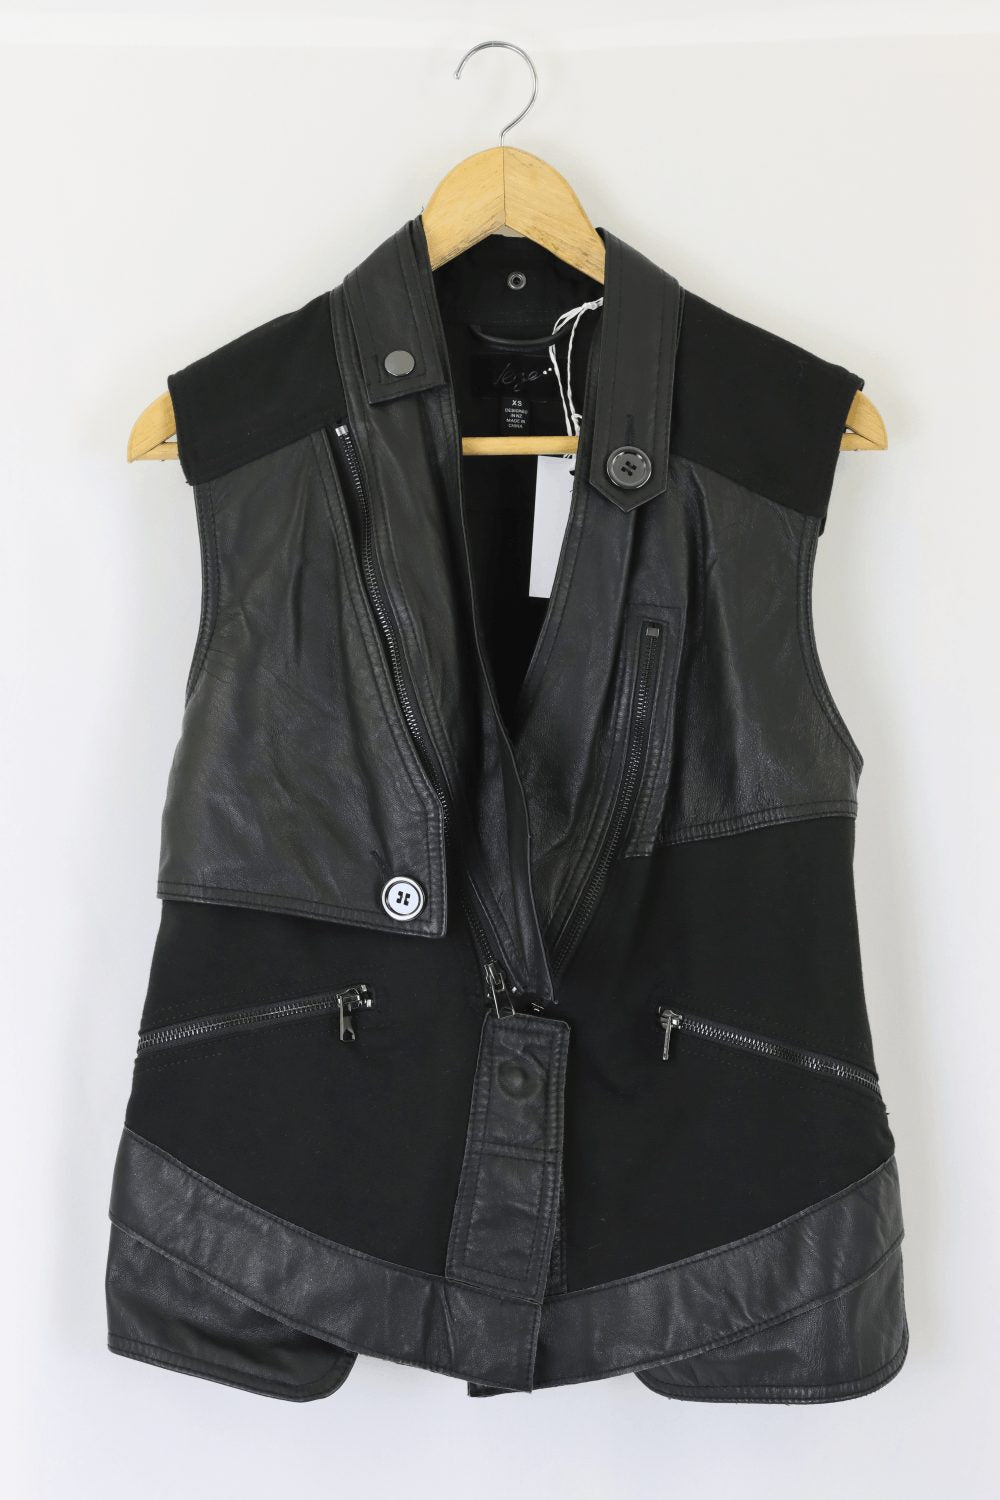 Verge Black Leather Look Vest Xs